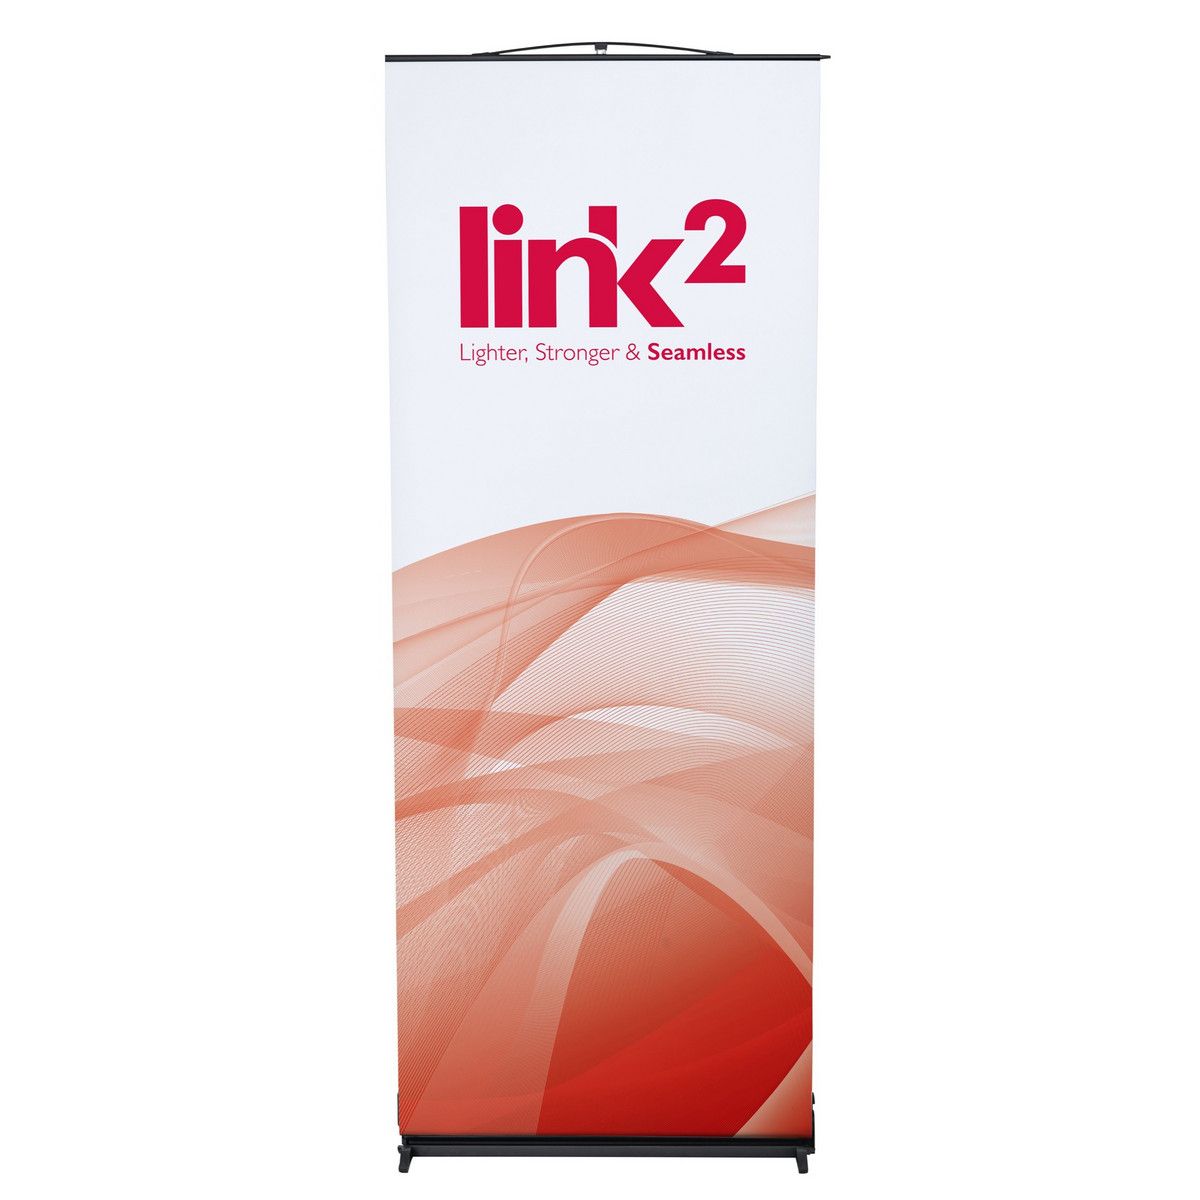 Link2 Single Banner Stand.jpg